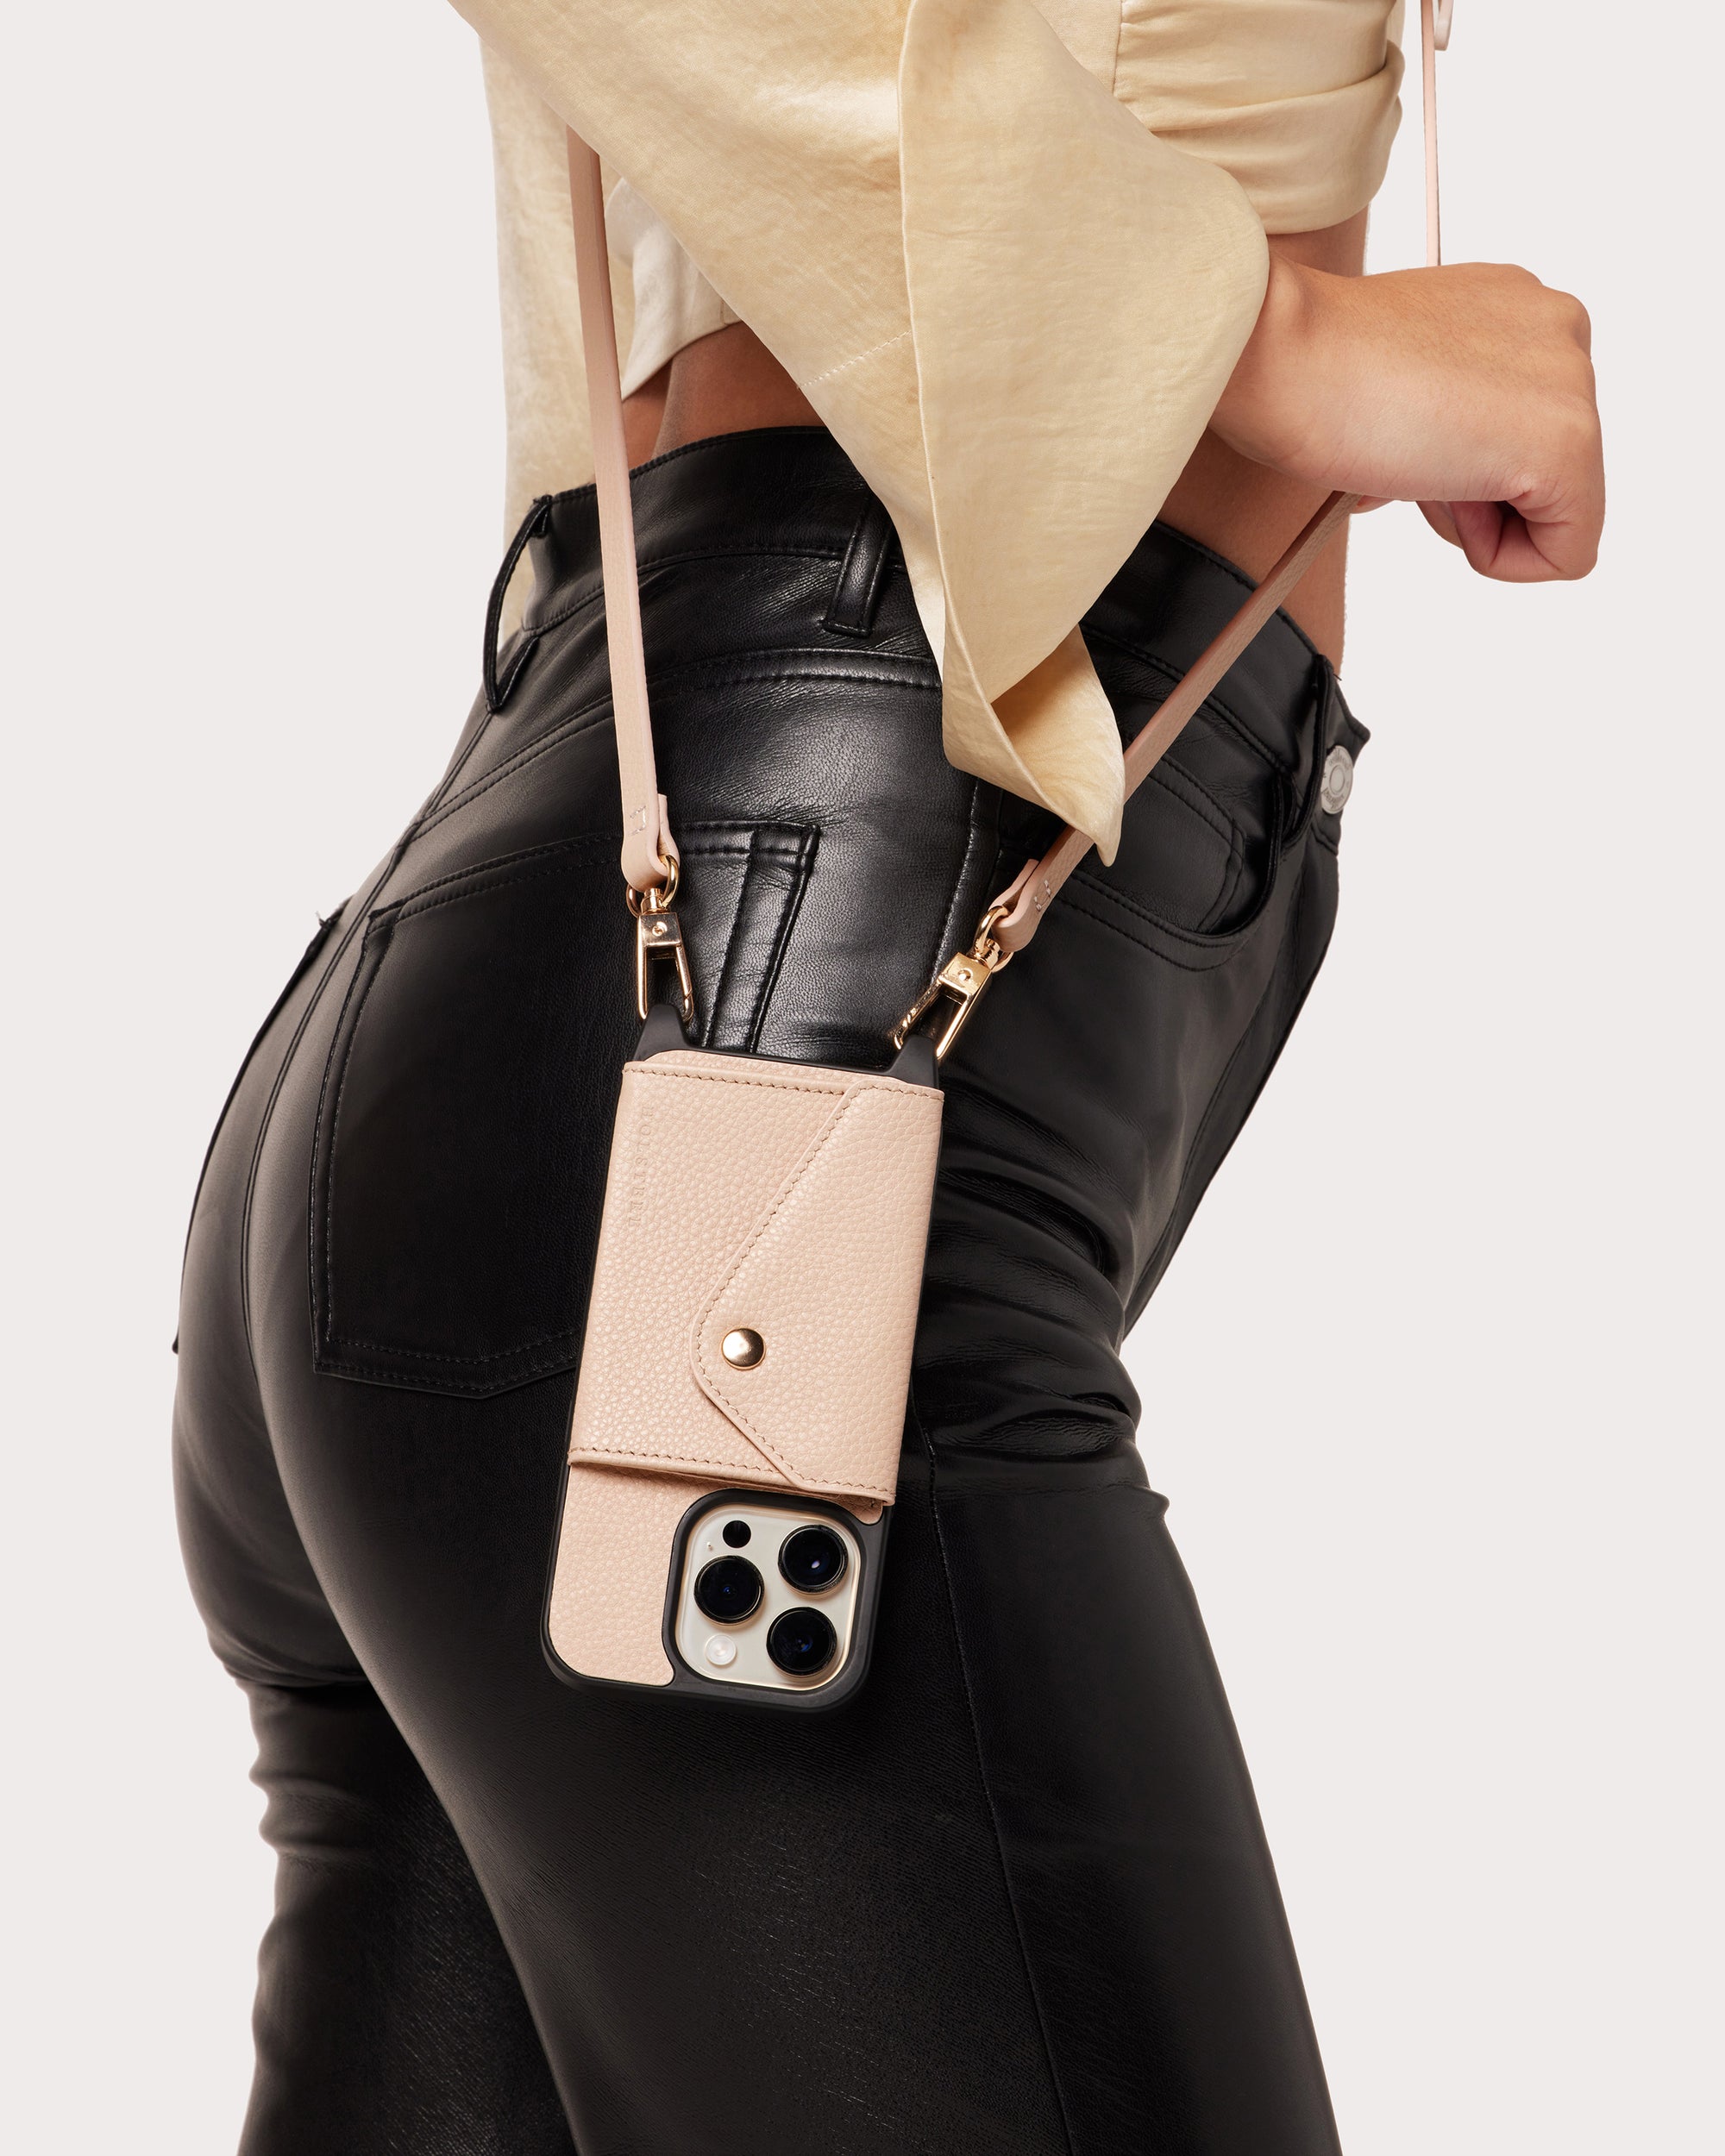 Hudson & James Genuine Leather Phone Bag, Real Leather Phone Purse